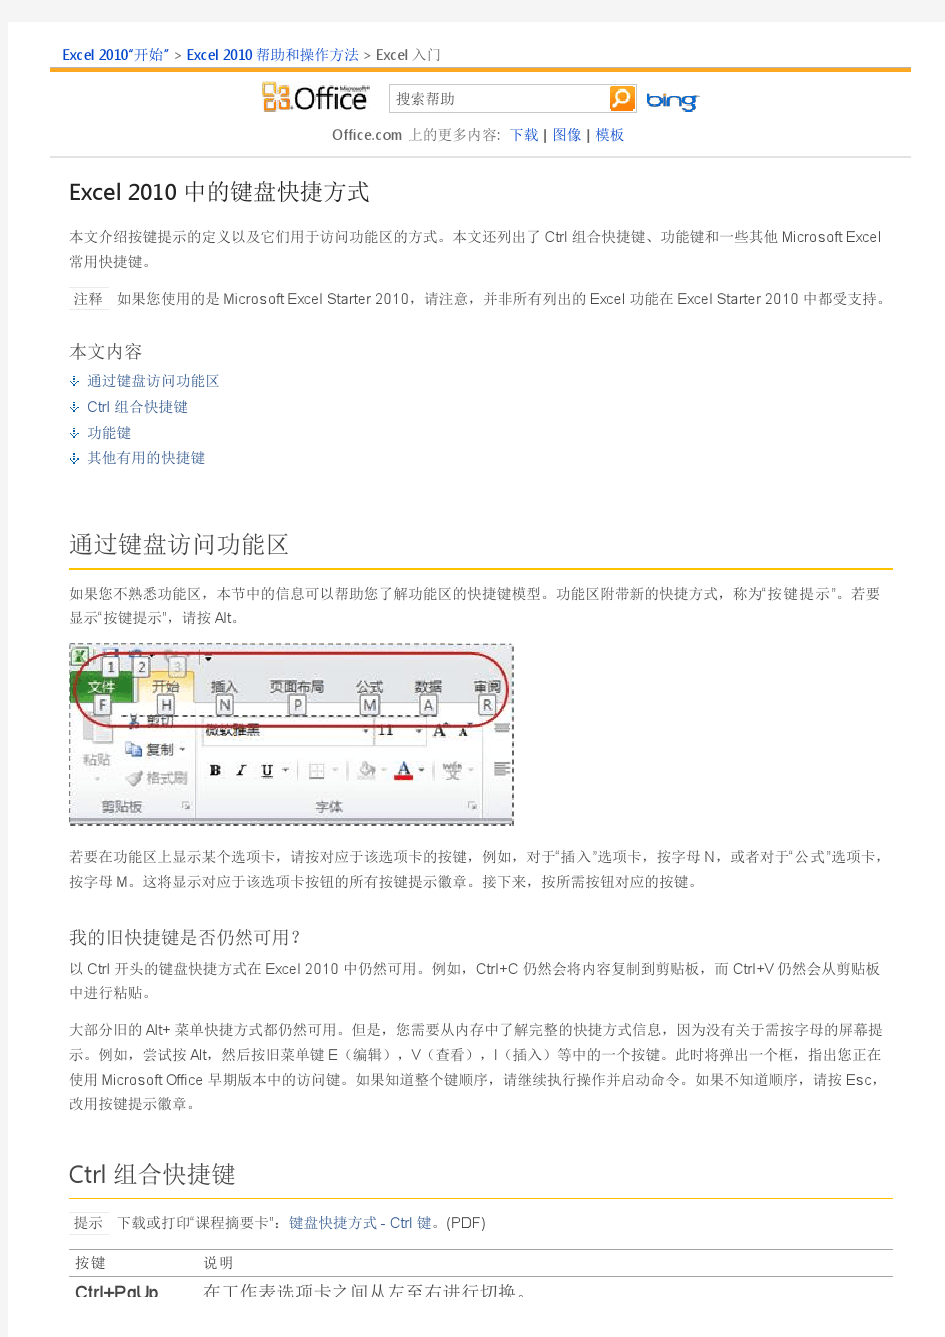 Excel 2010 中的键盘快捷方式